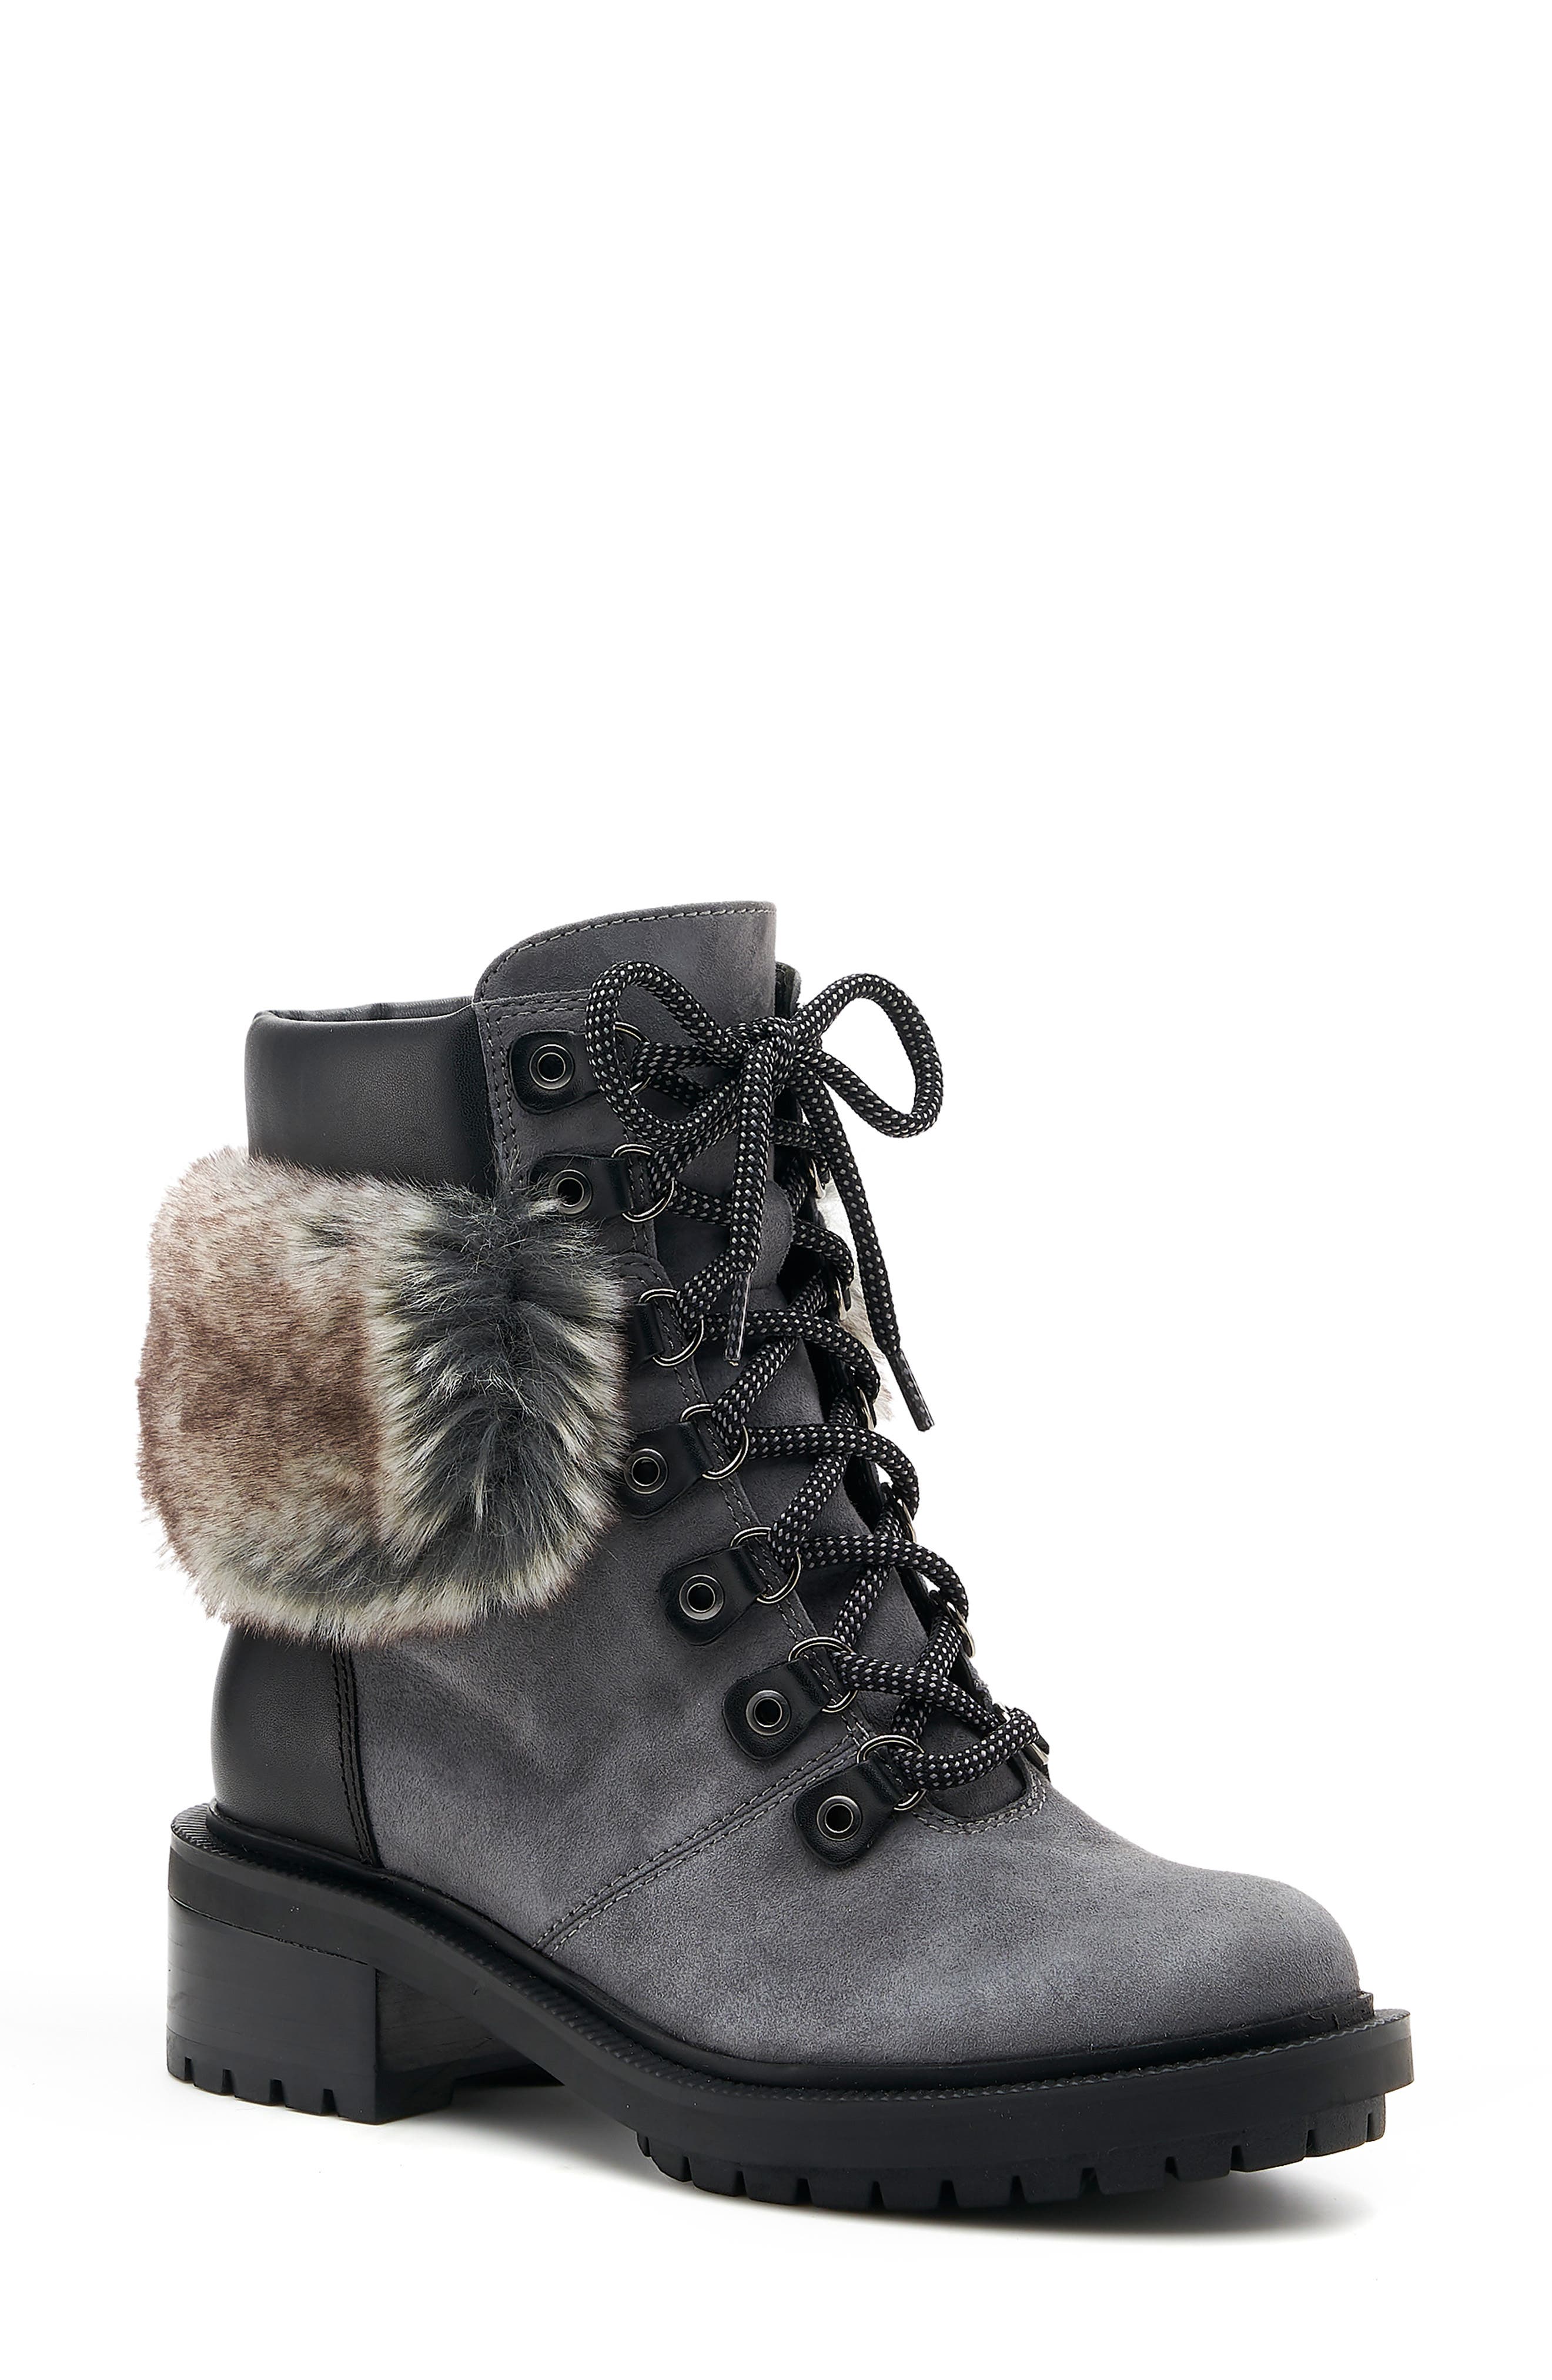 botkier winter combat boots